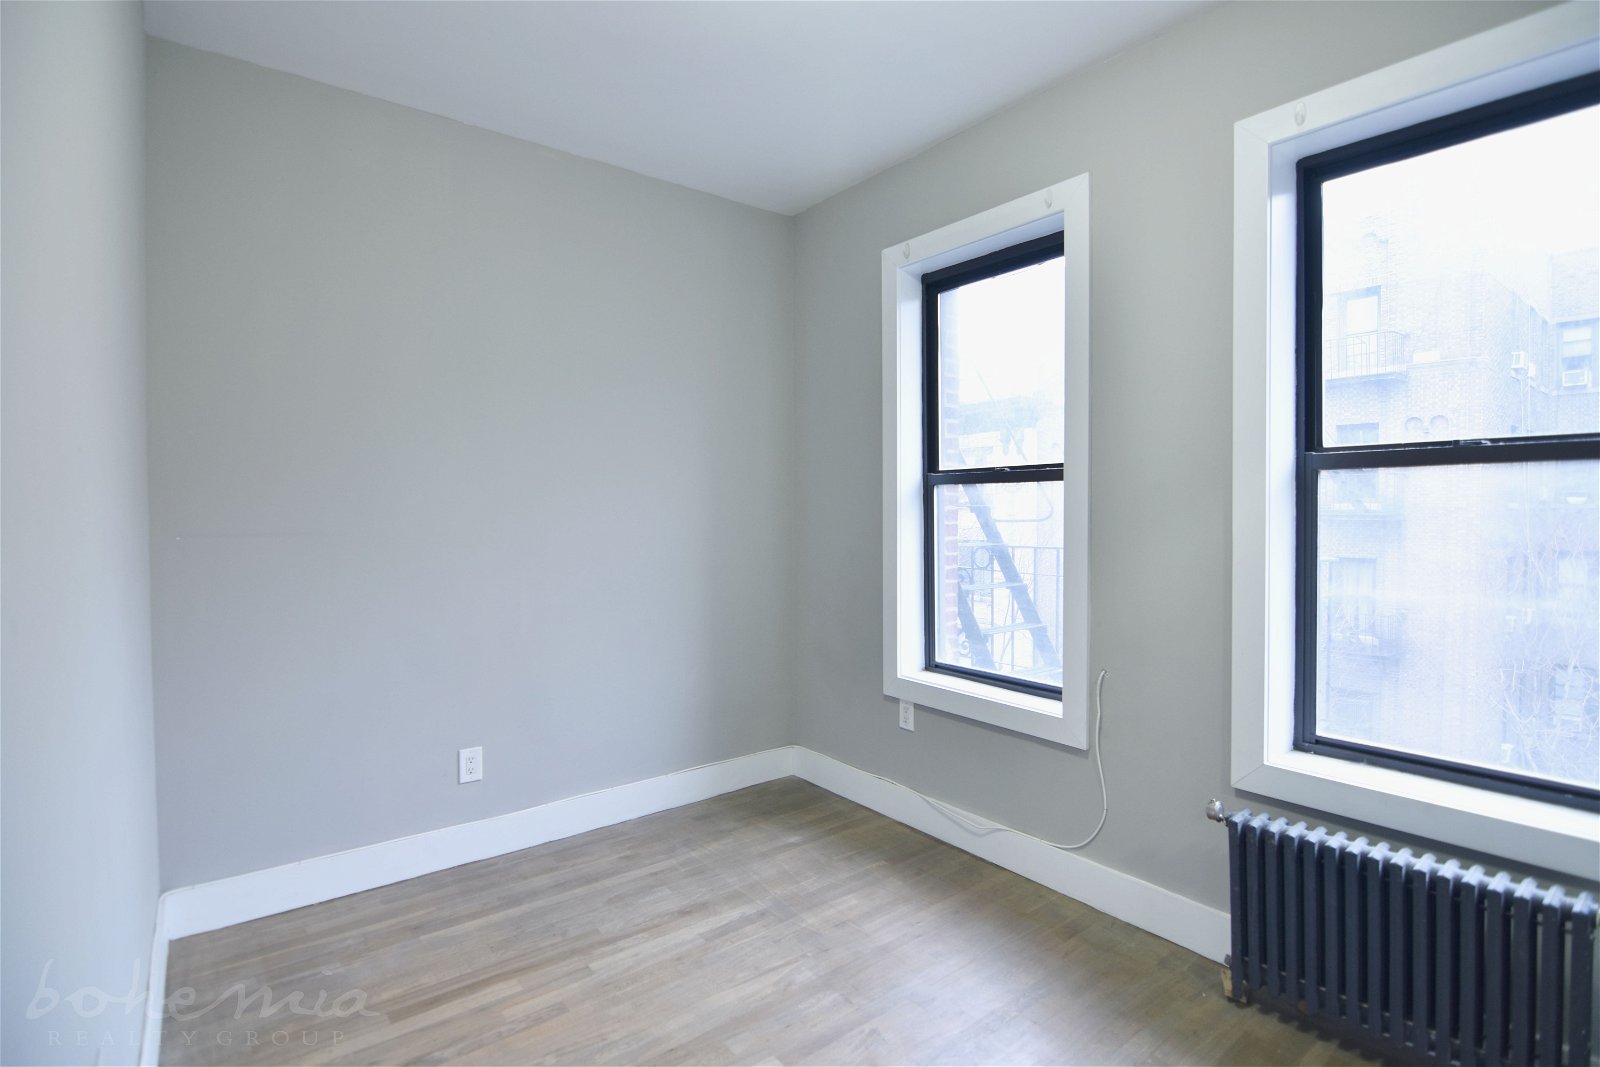 Real estate property located at 2 Pinehurst D-6, New York, New York City, NY